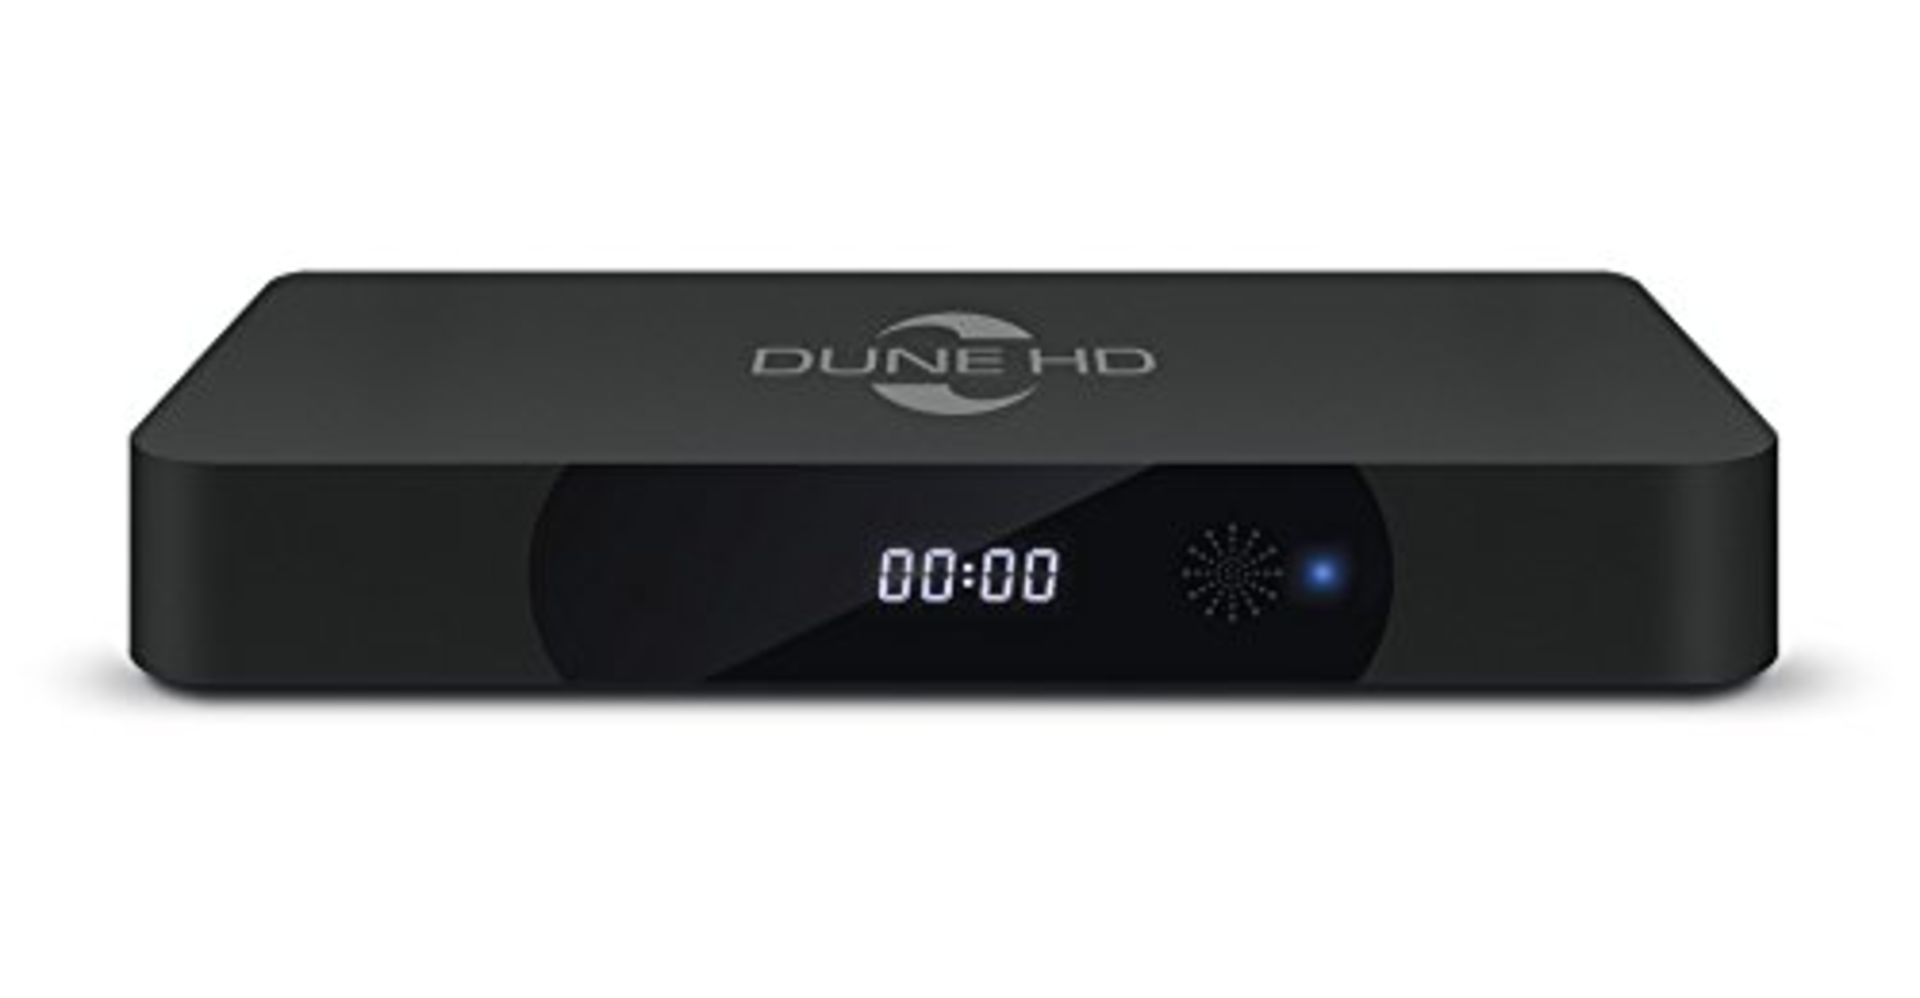 RRP £199.00 Dune HD Pro 4K Multimedia Player (4Kp60, HDR, BT.2020, HDMI 2.0a)-Black